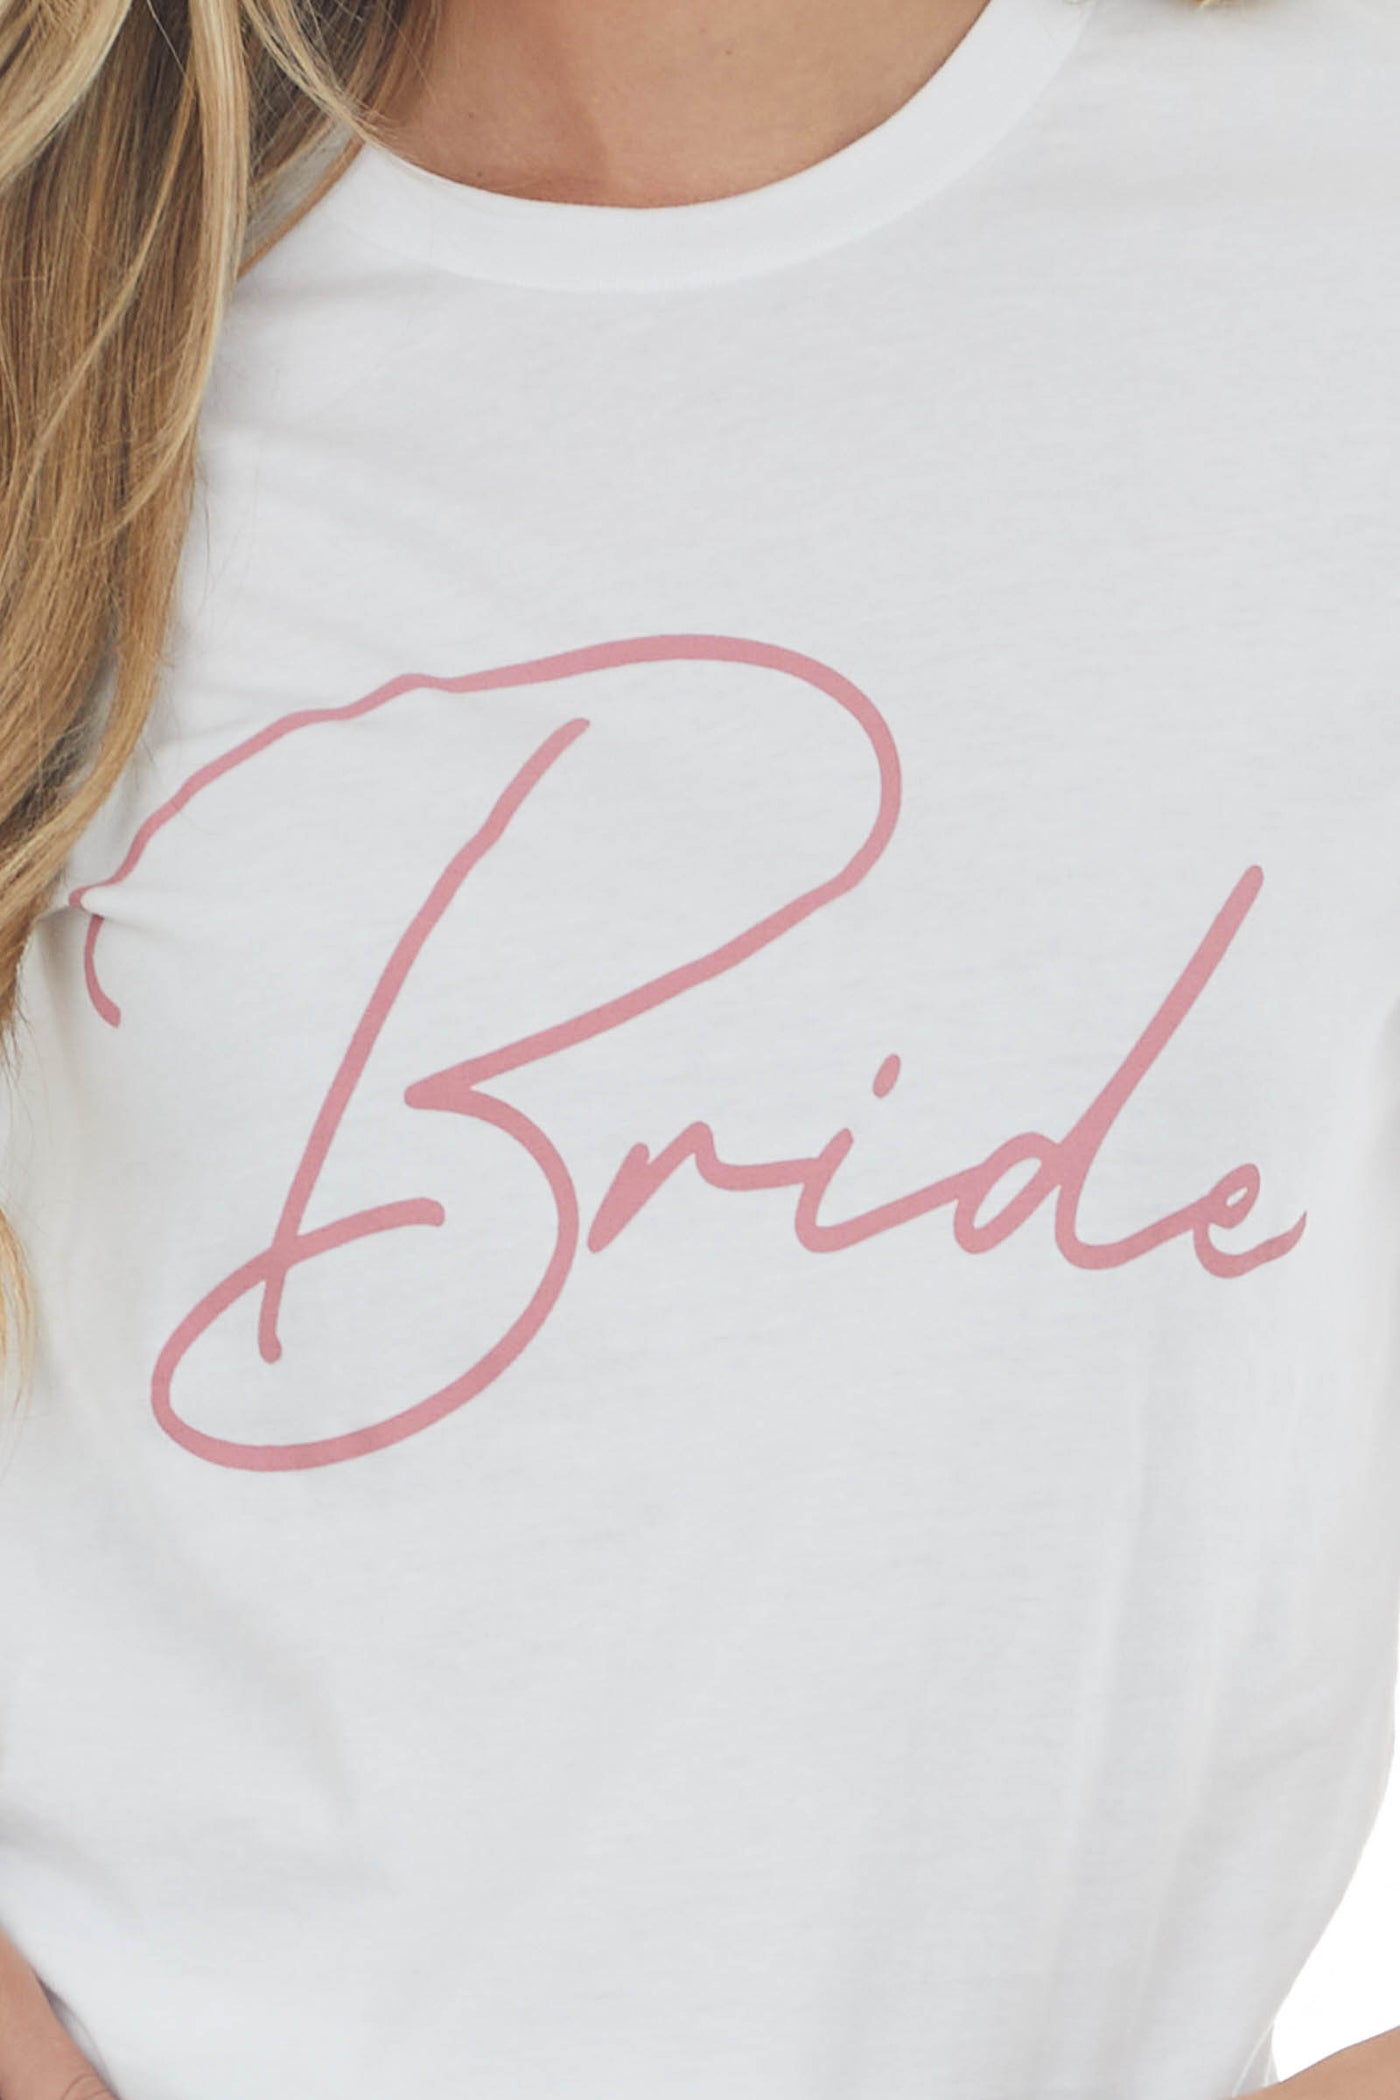 White 'Bride' Script Graphic Short Sleeve Tee